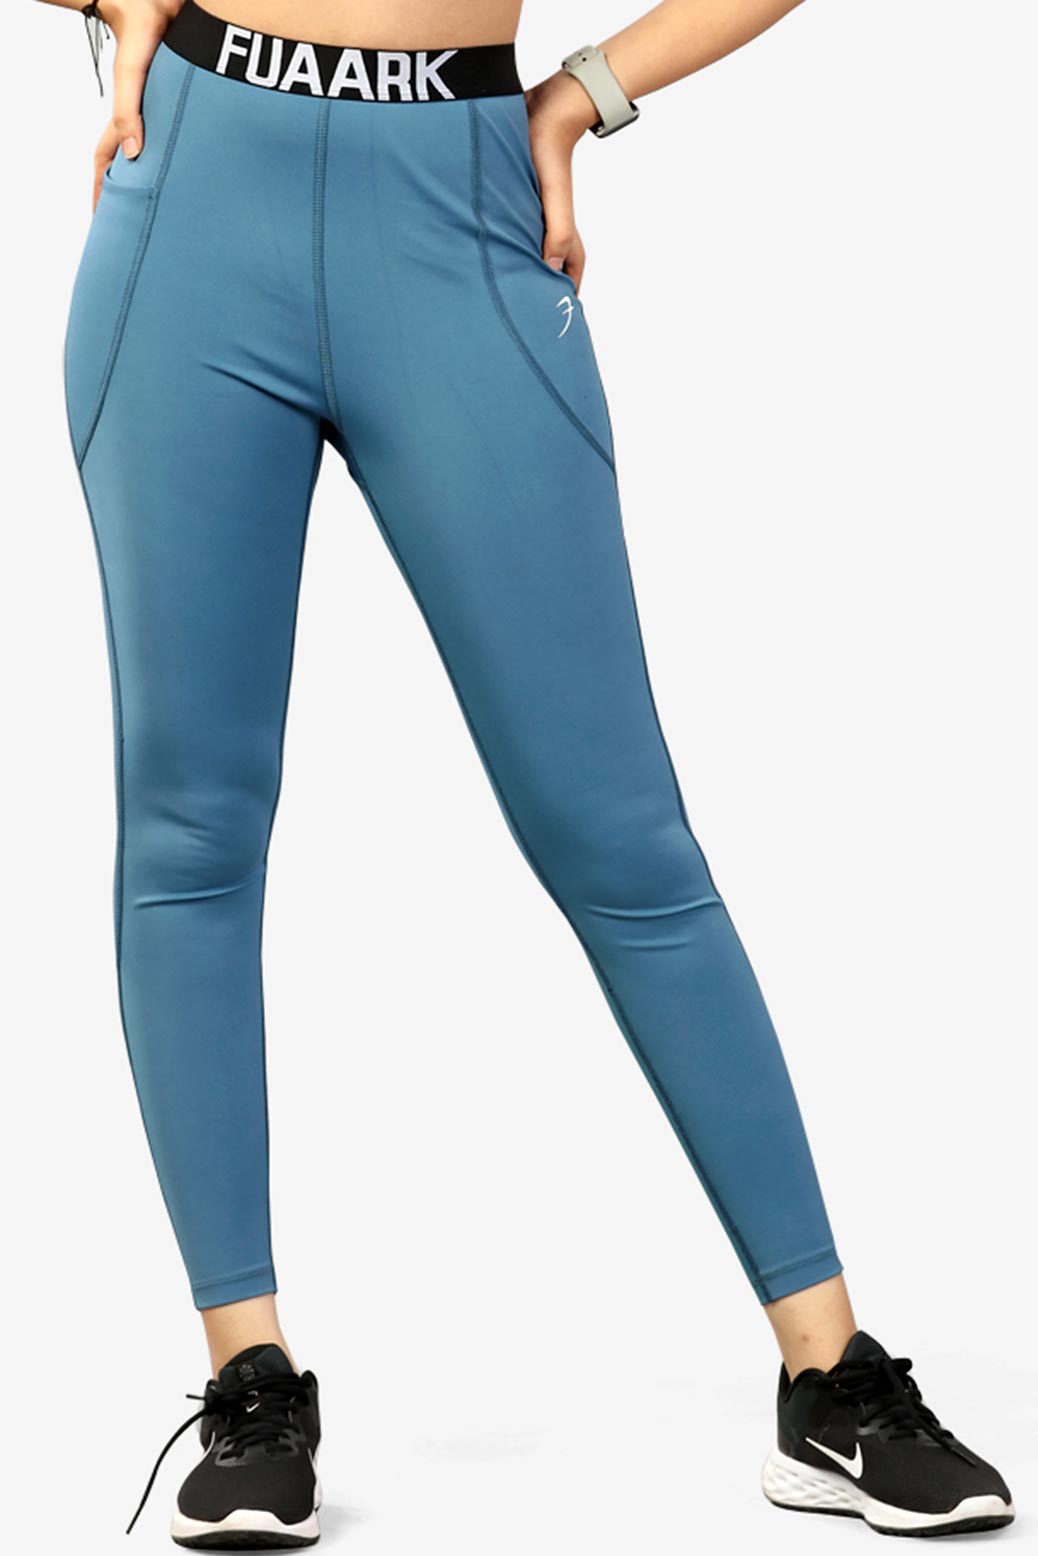 Ocean Blue Anti cellulite leggings with scrunch booty - Worldwide shipping